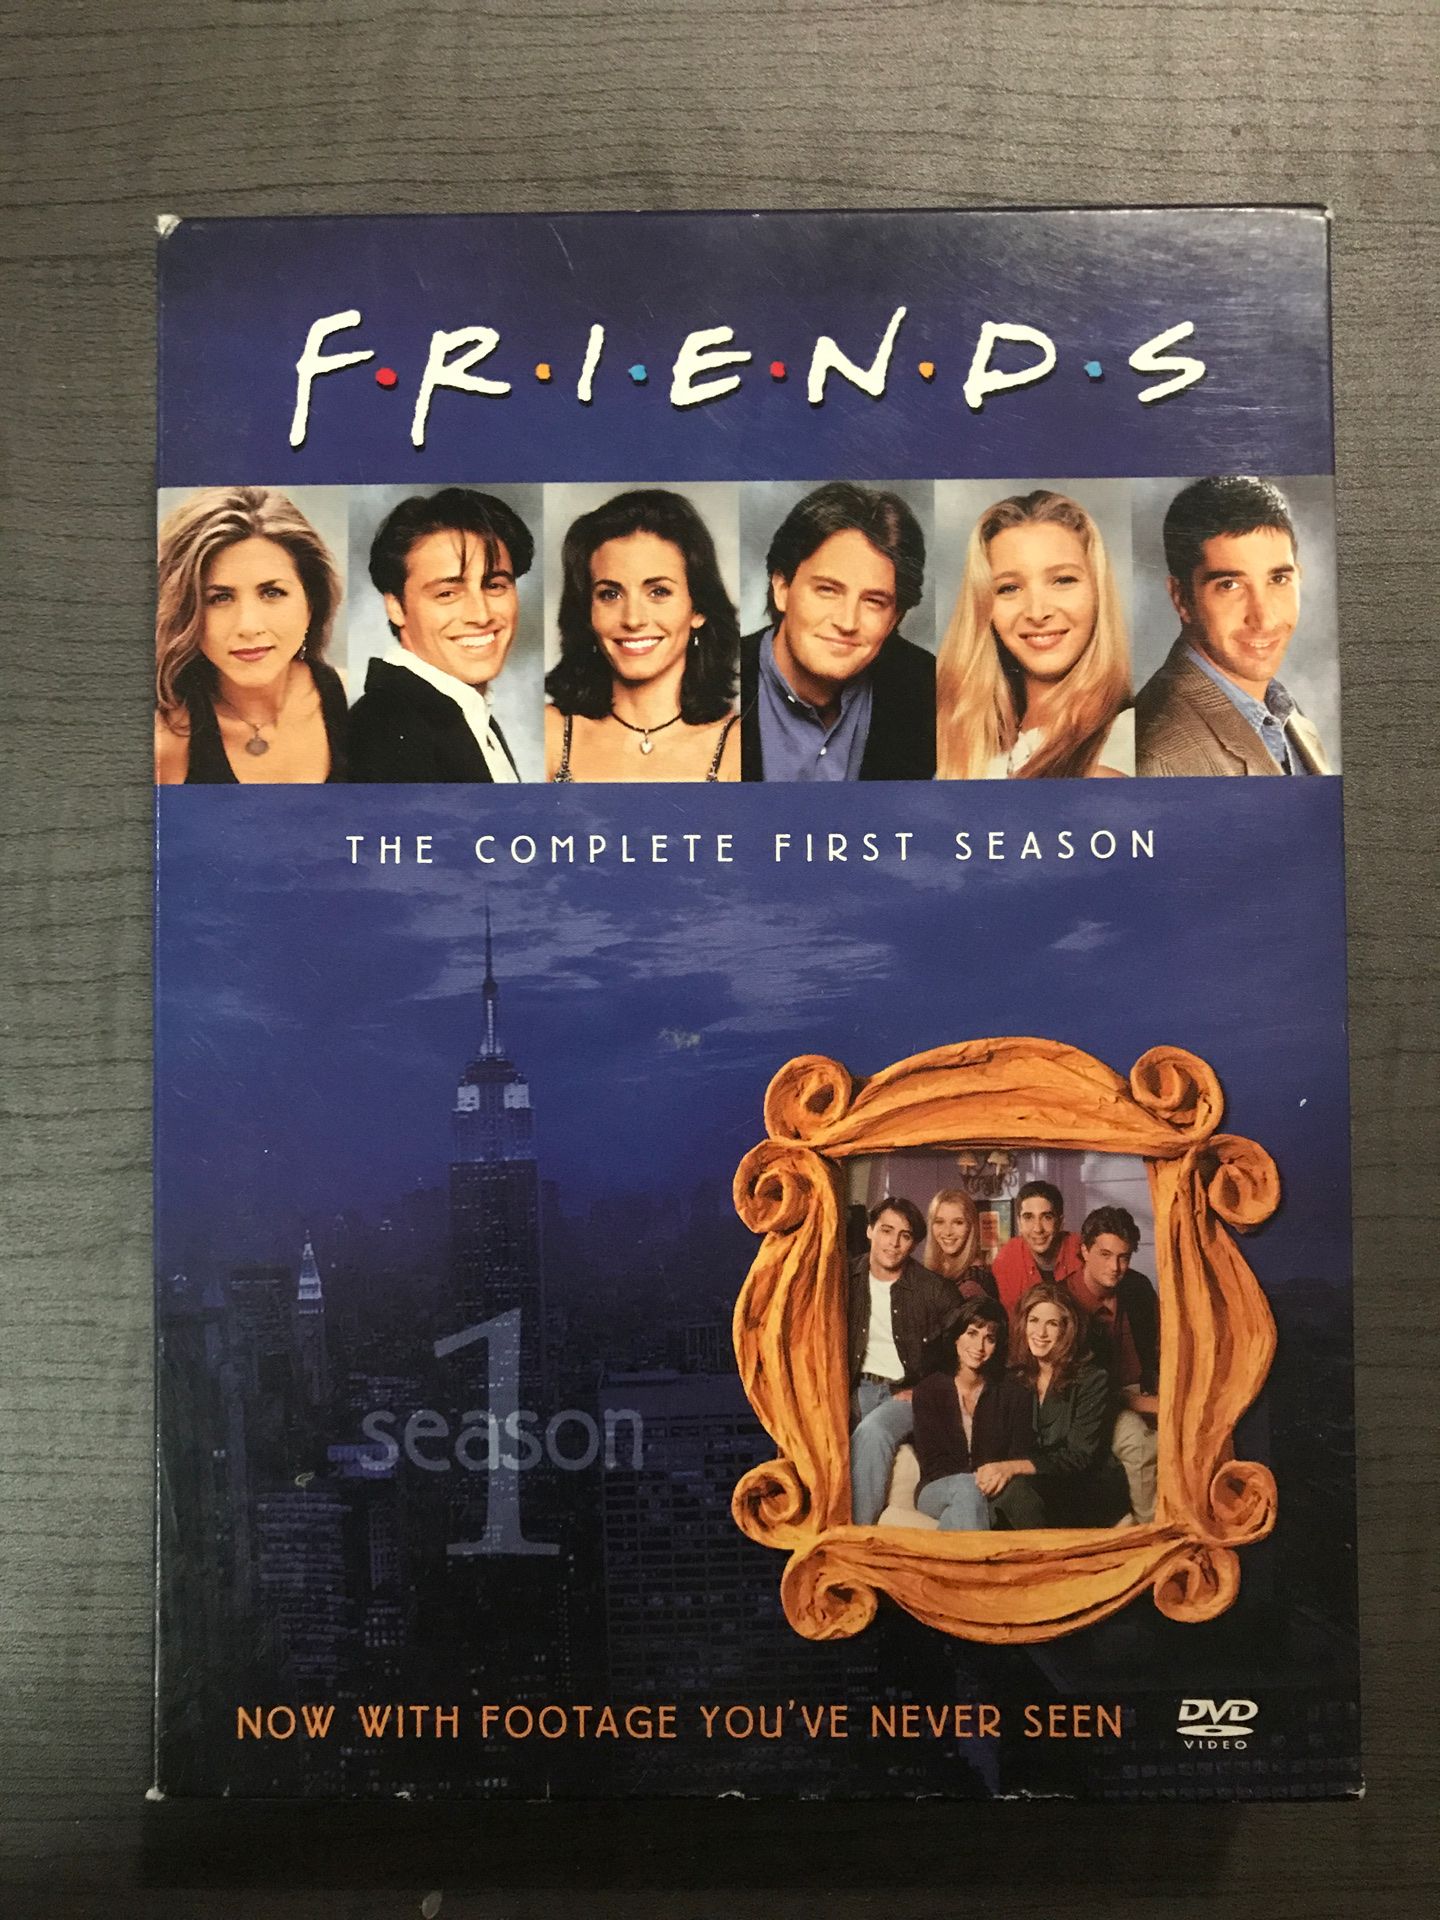 Friends Season 1 DVDs (complete)